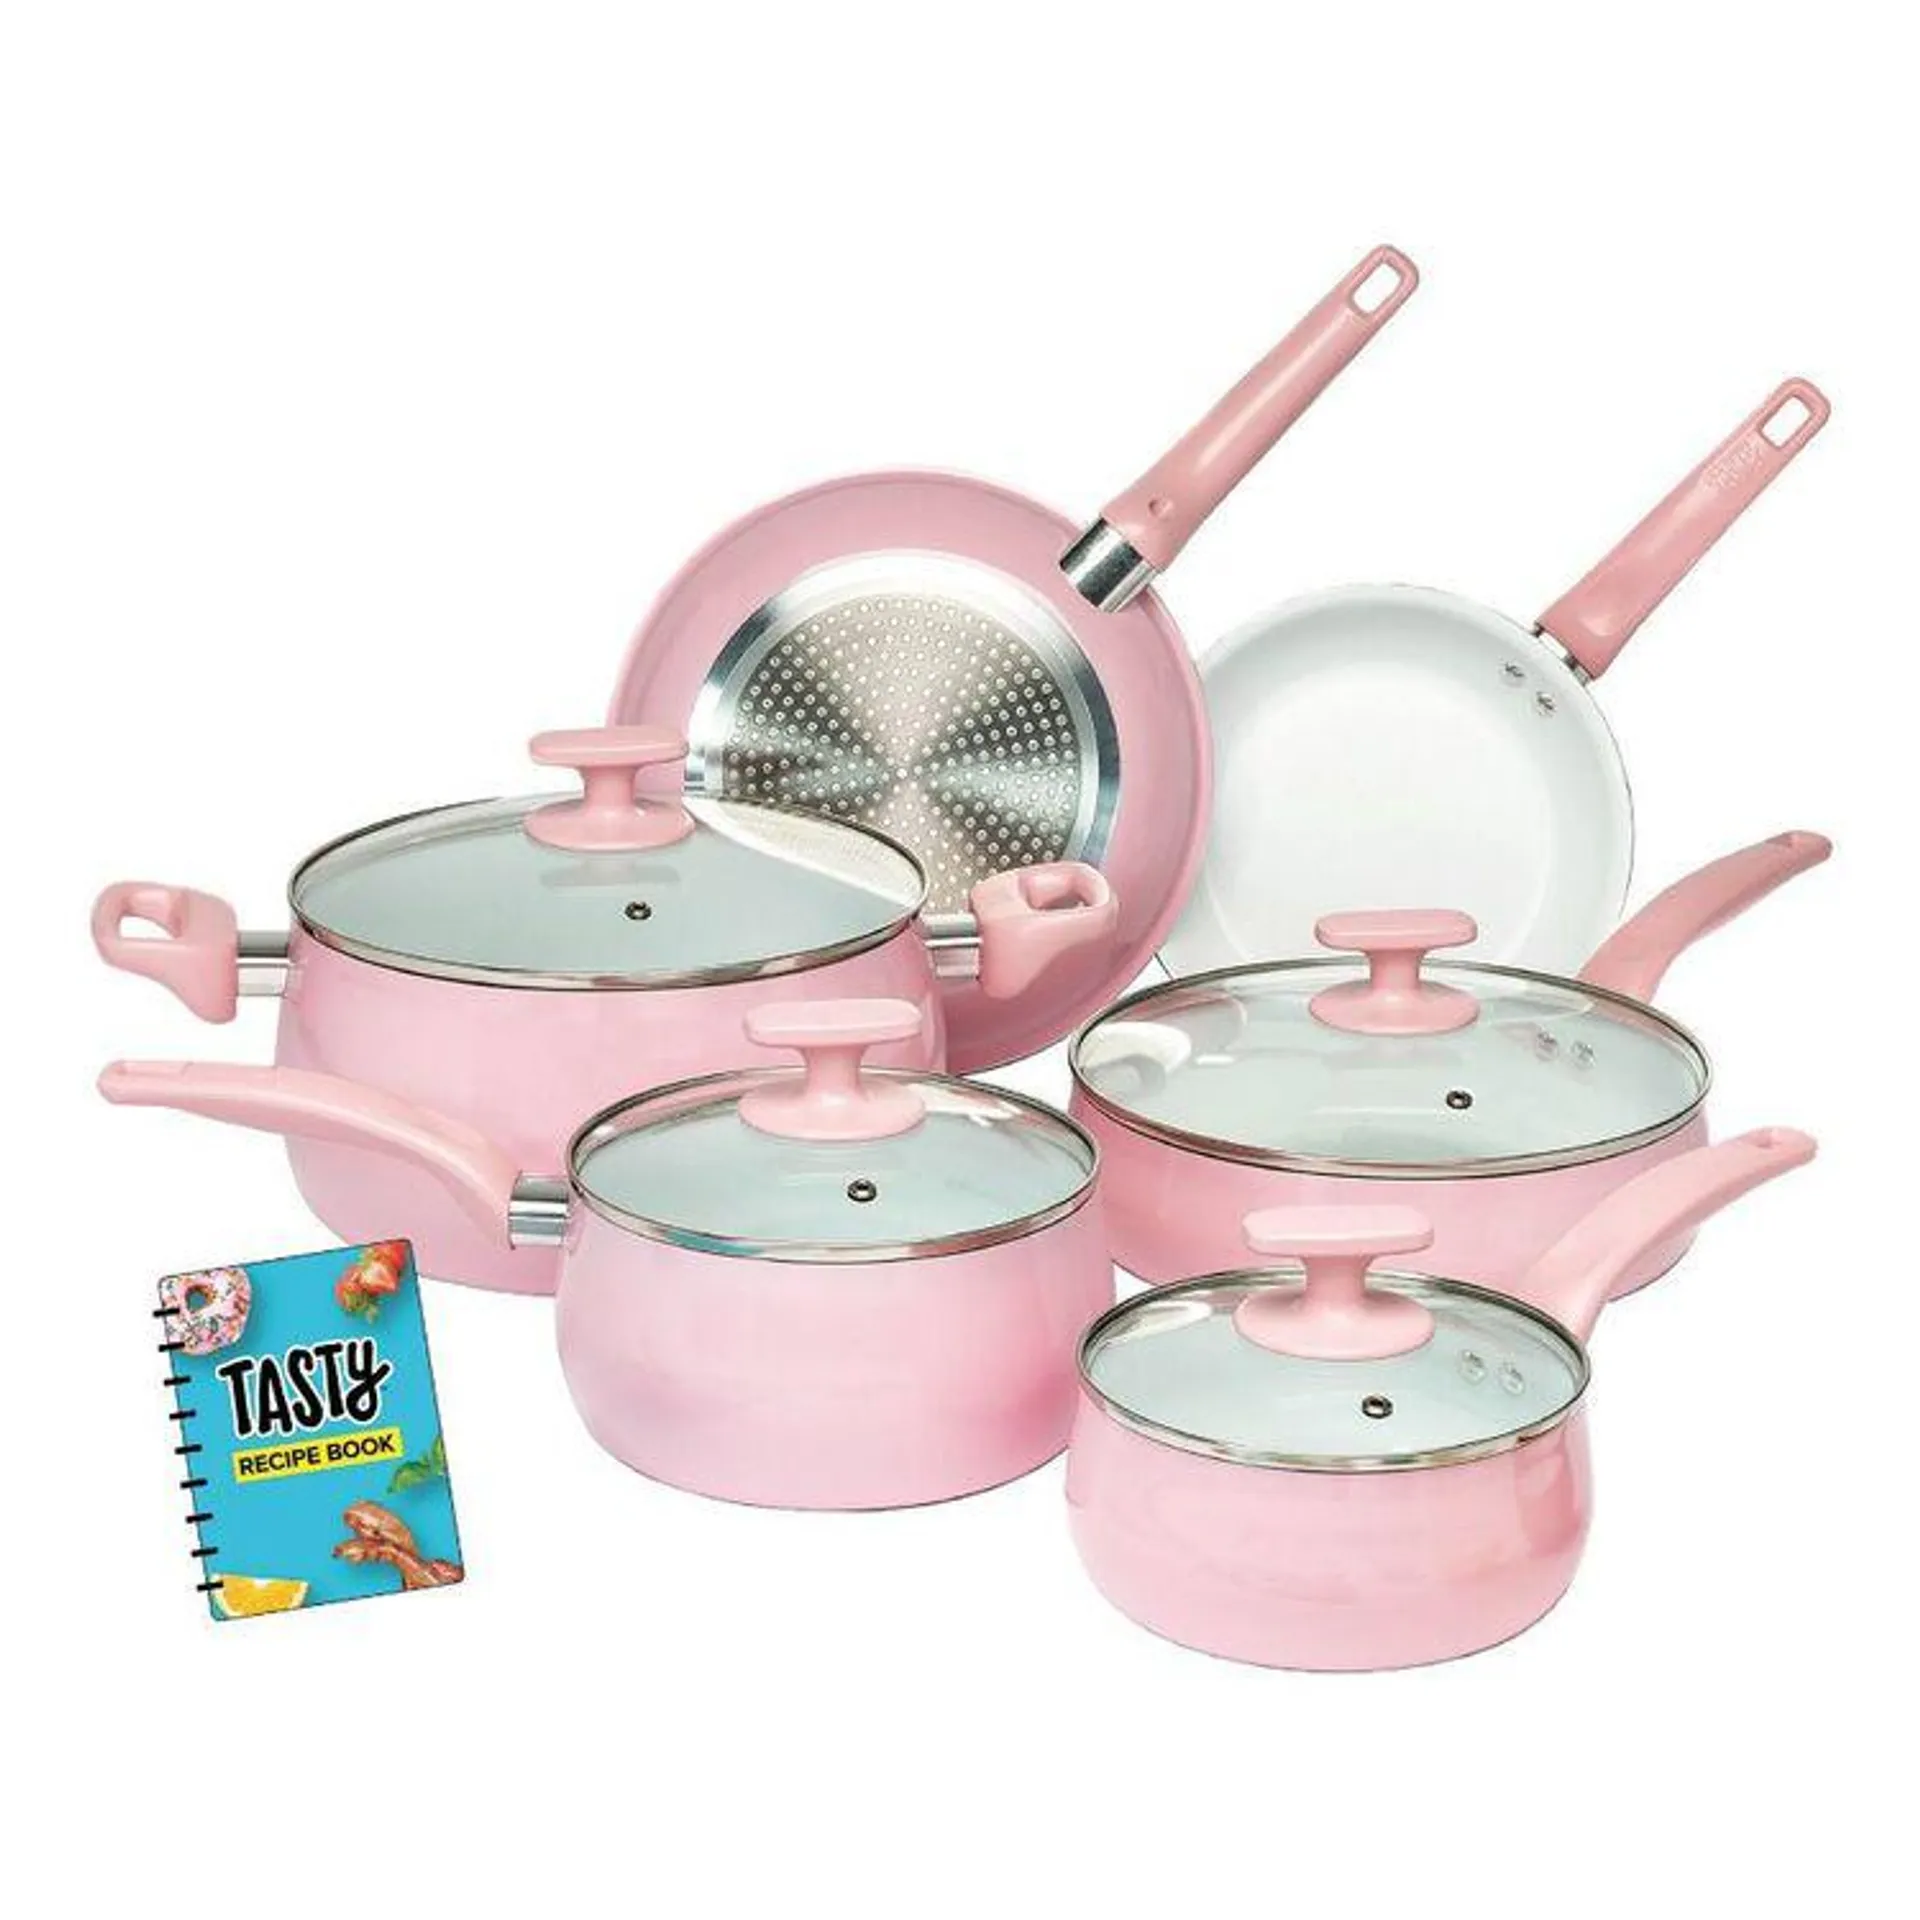 Tasty Cookware 7 Piece Set Pink